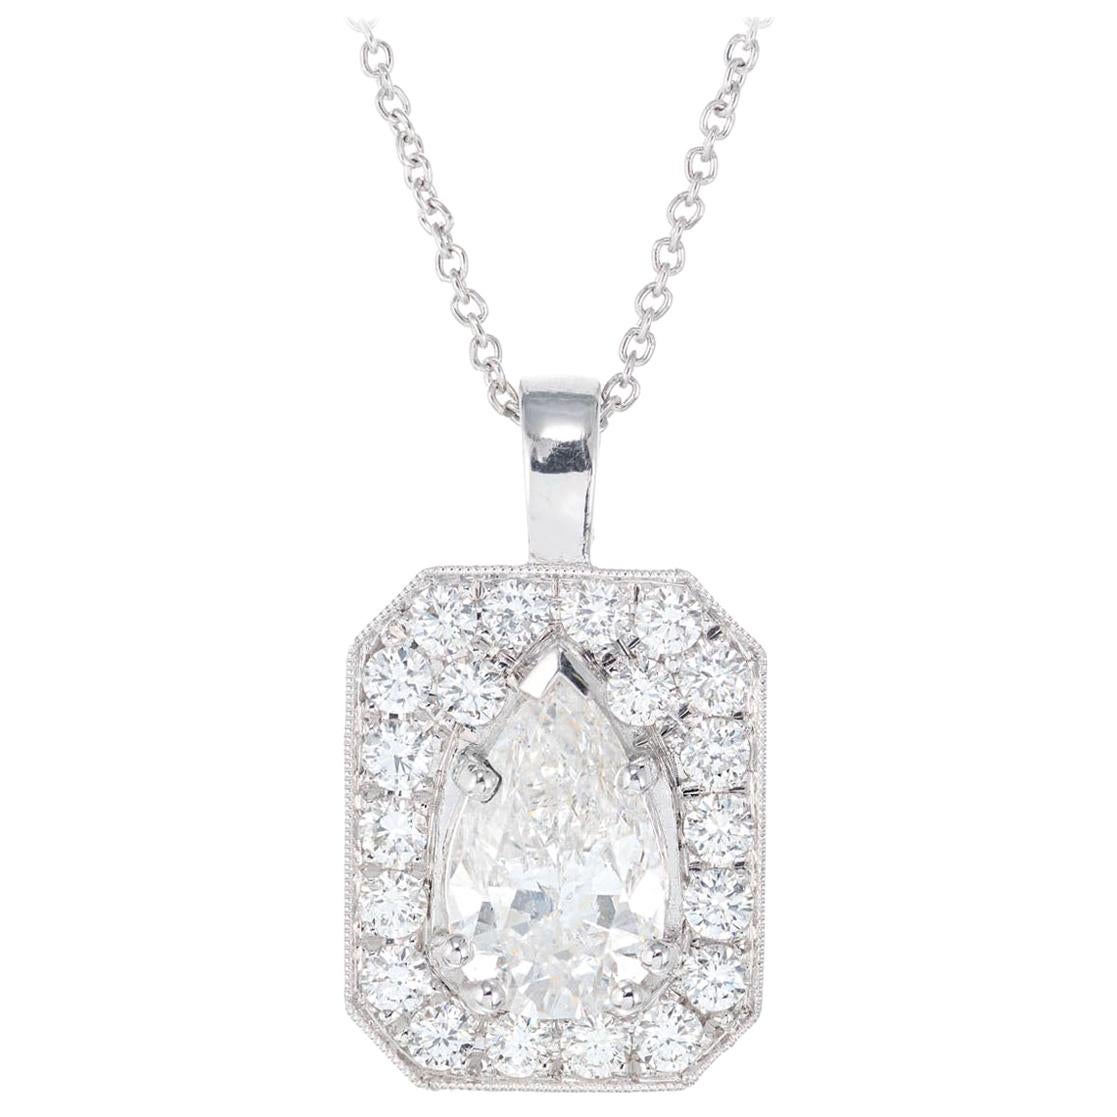 Peter Suchy EGL Certified 1.43 Carat Diamond Platinum Pendant Necklace